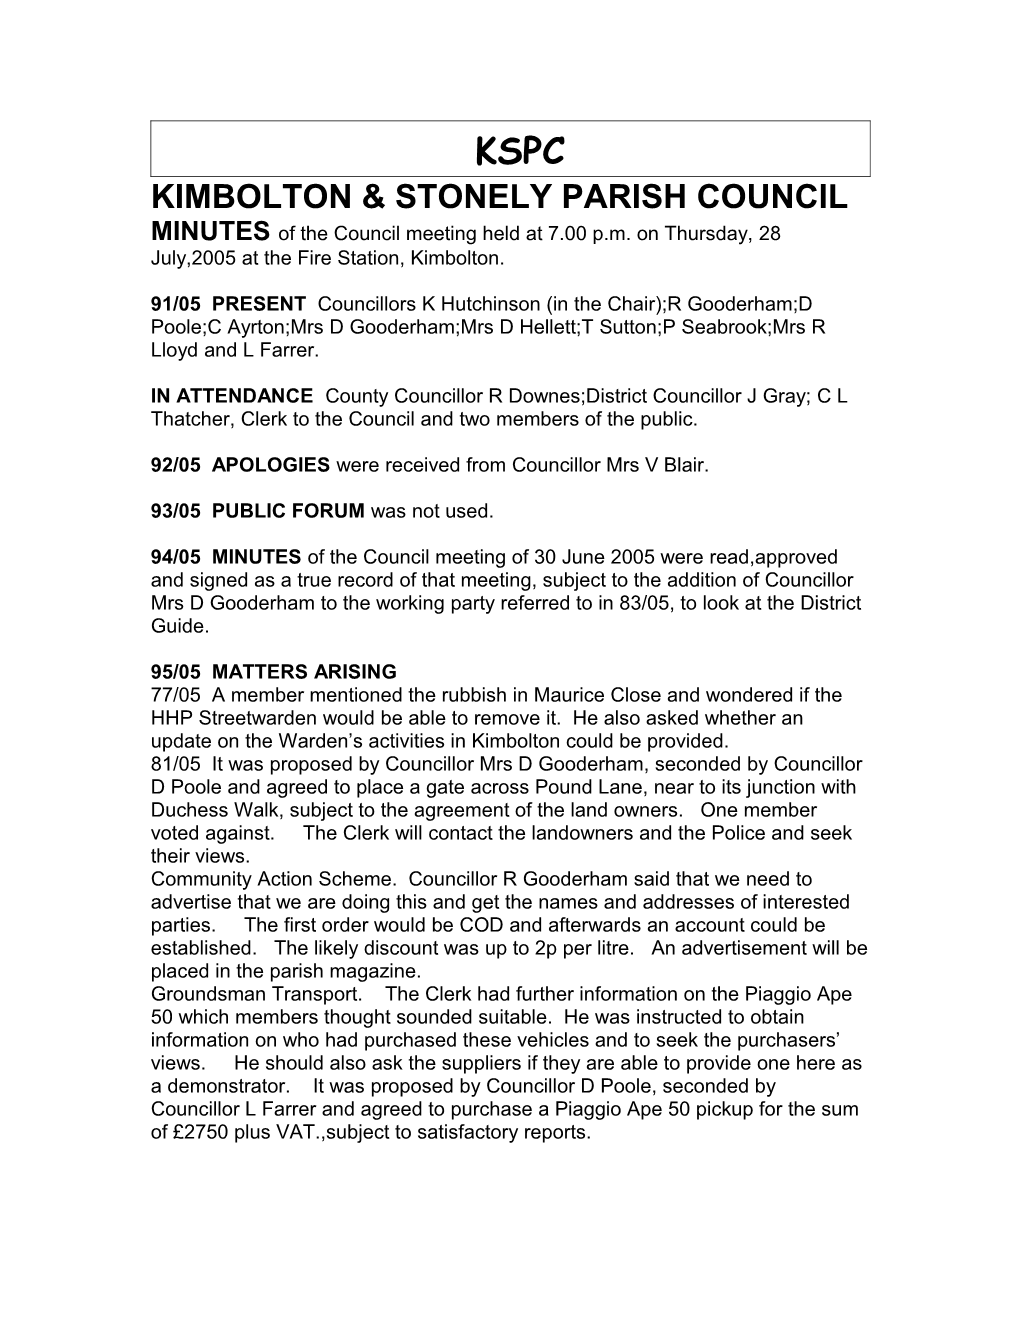 Kimbolton & Stonely Parish Council s1